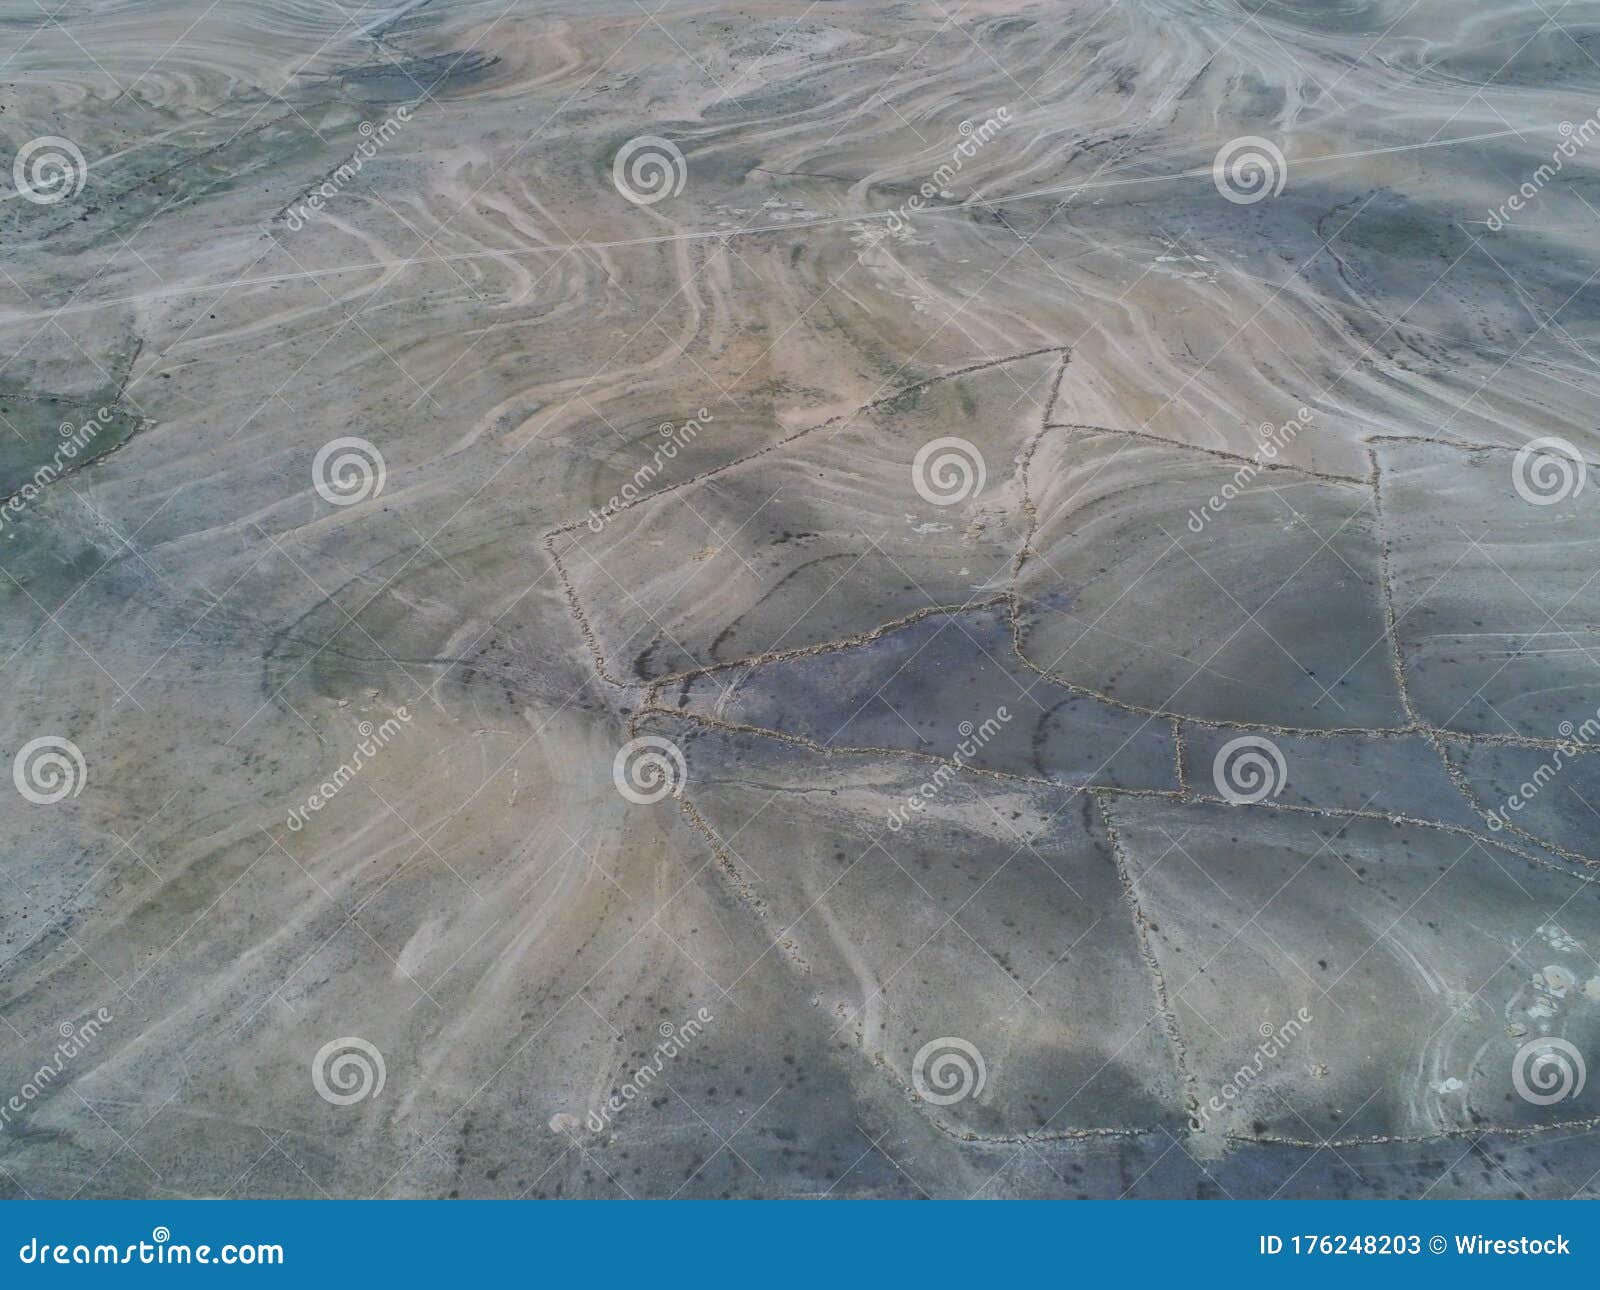 aerial shot of empty fields in salamanca, spain